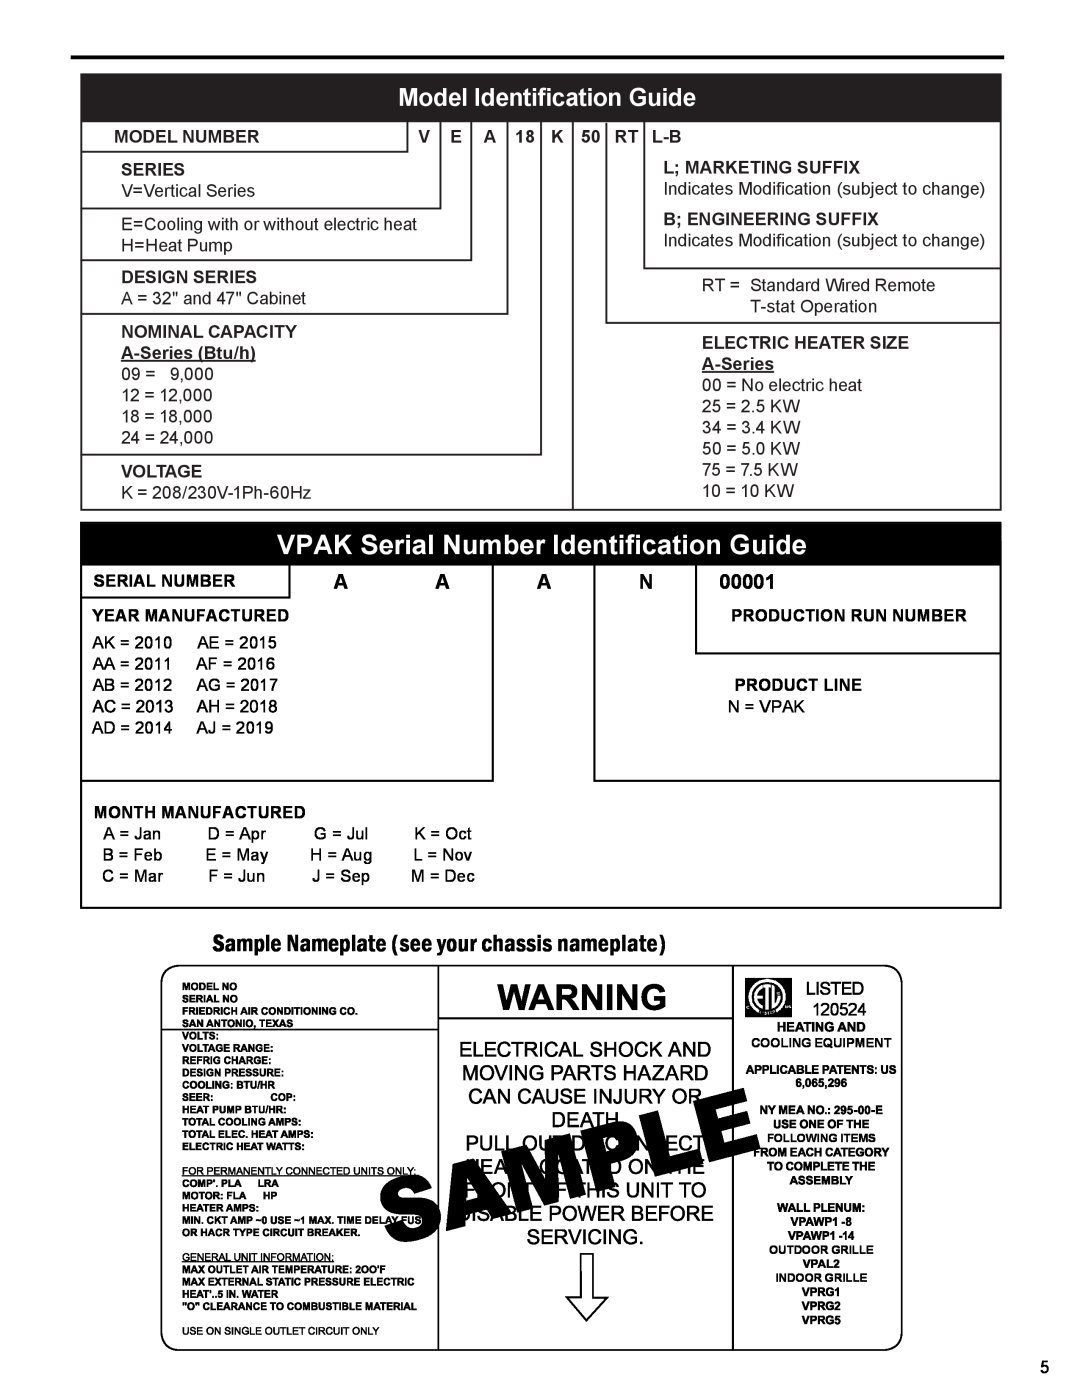 Friedrich R410A manual 00001, SampleNameplateseeyourchassis nameplate, Vpak Serial Number Identification Guide 